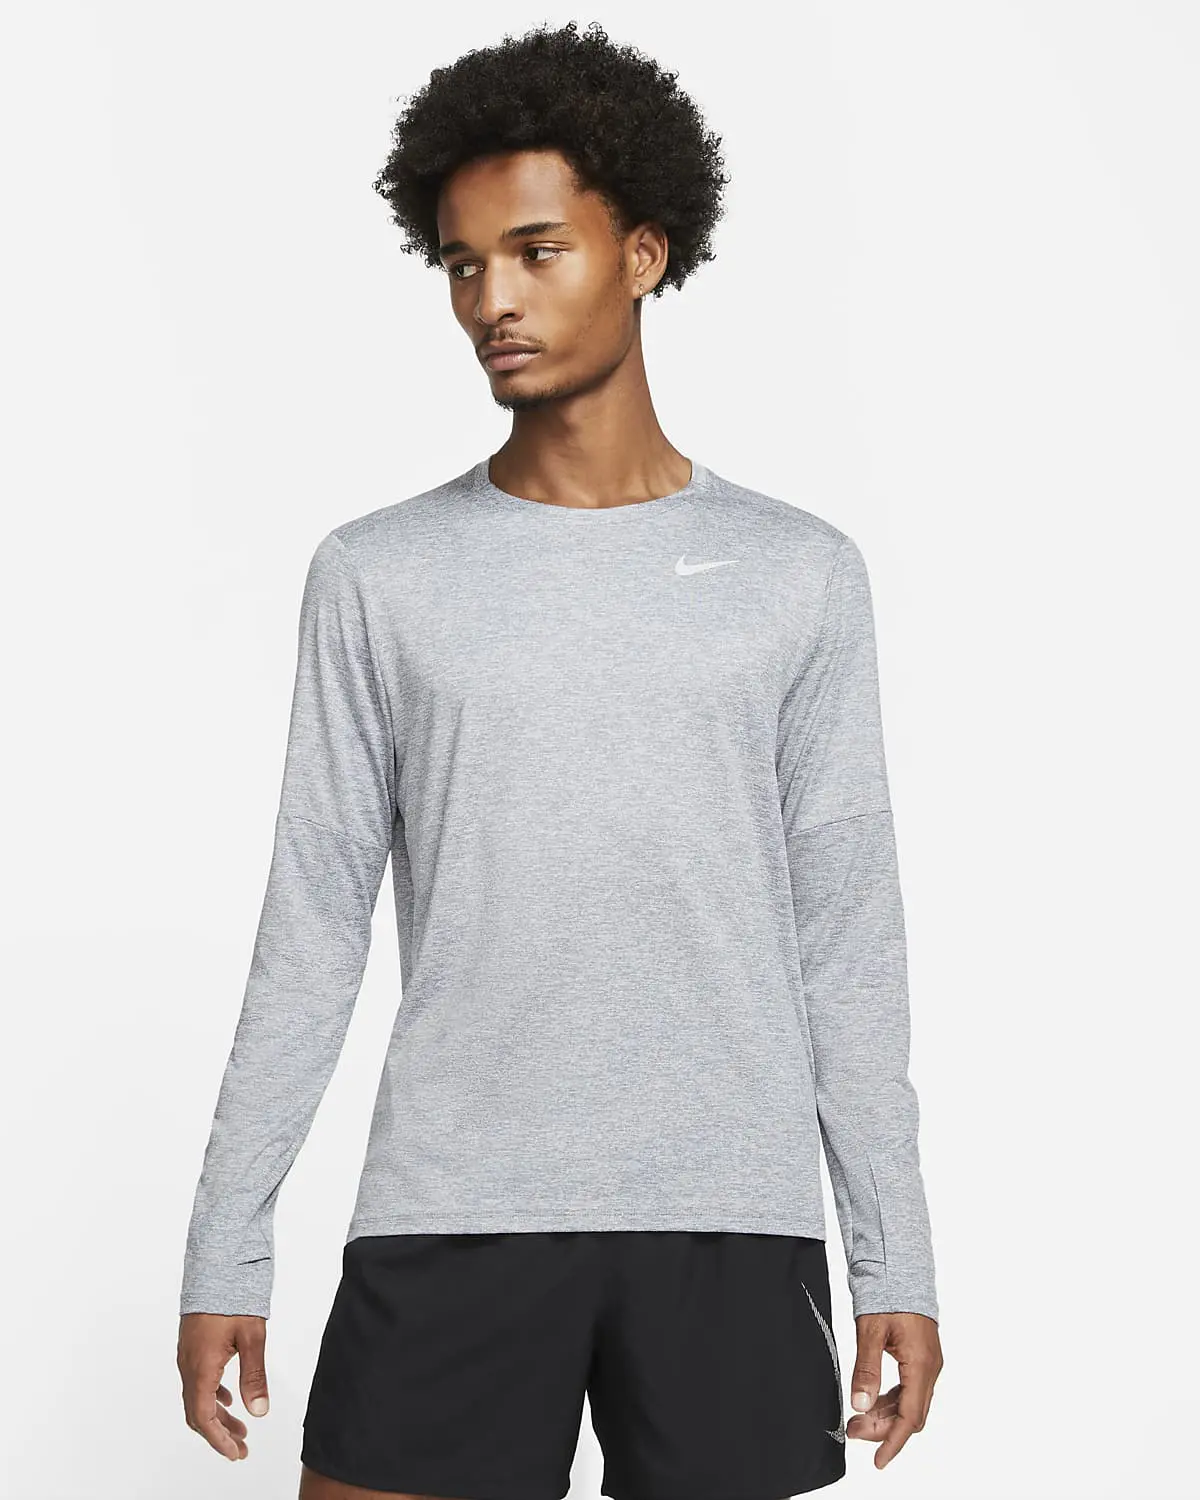 Nike Camisetas. 1